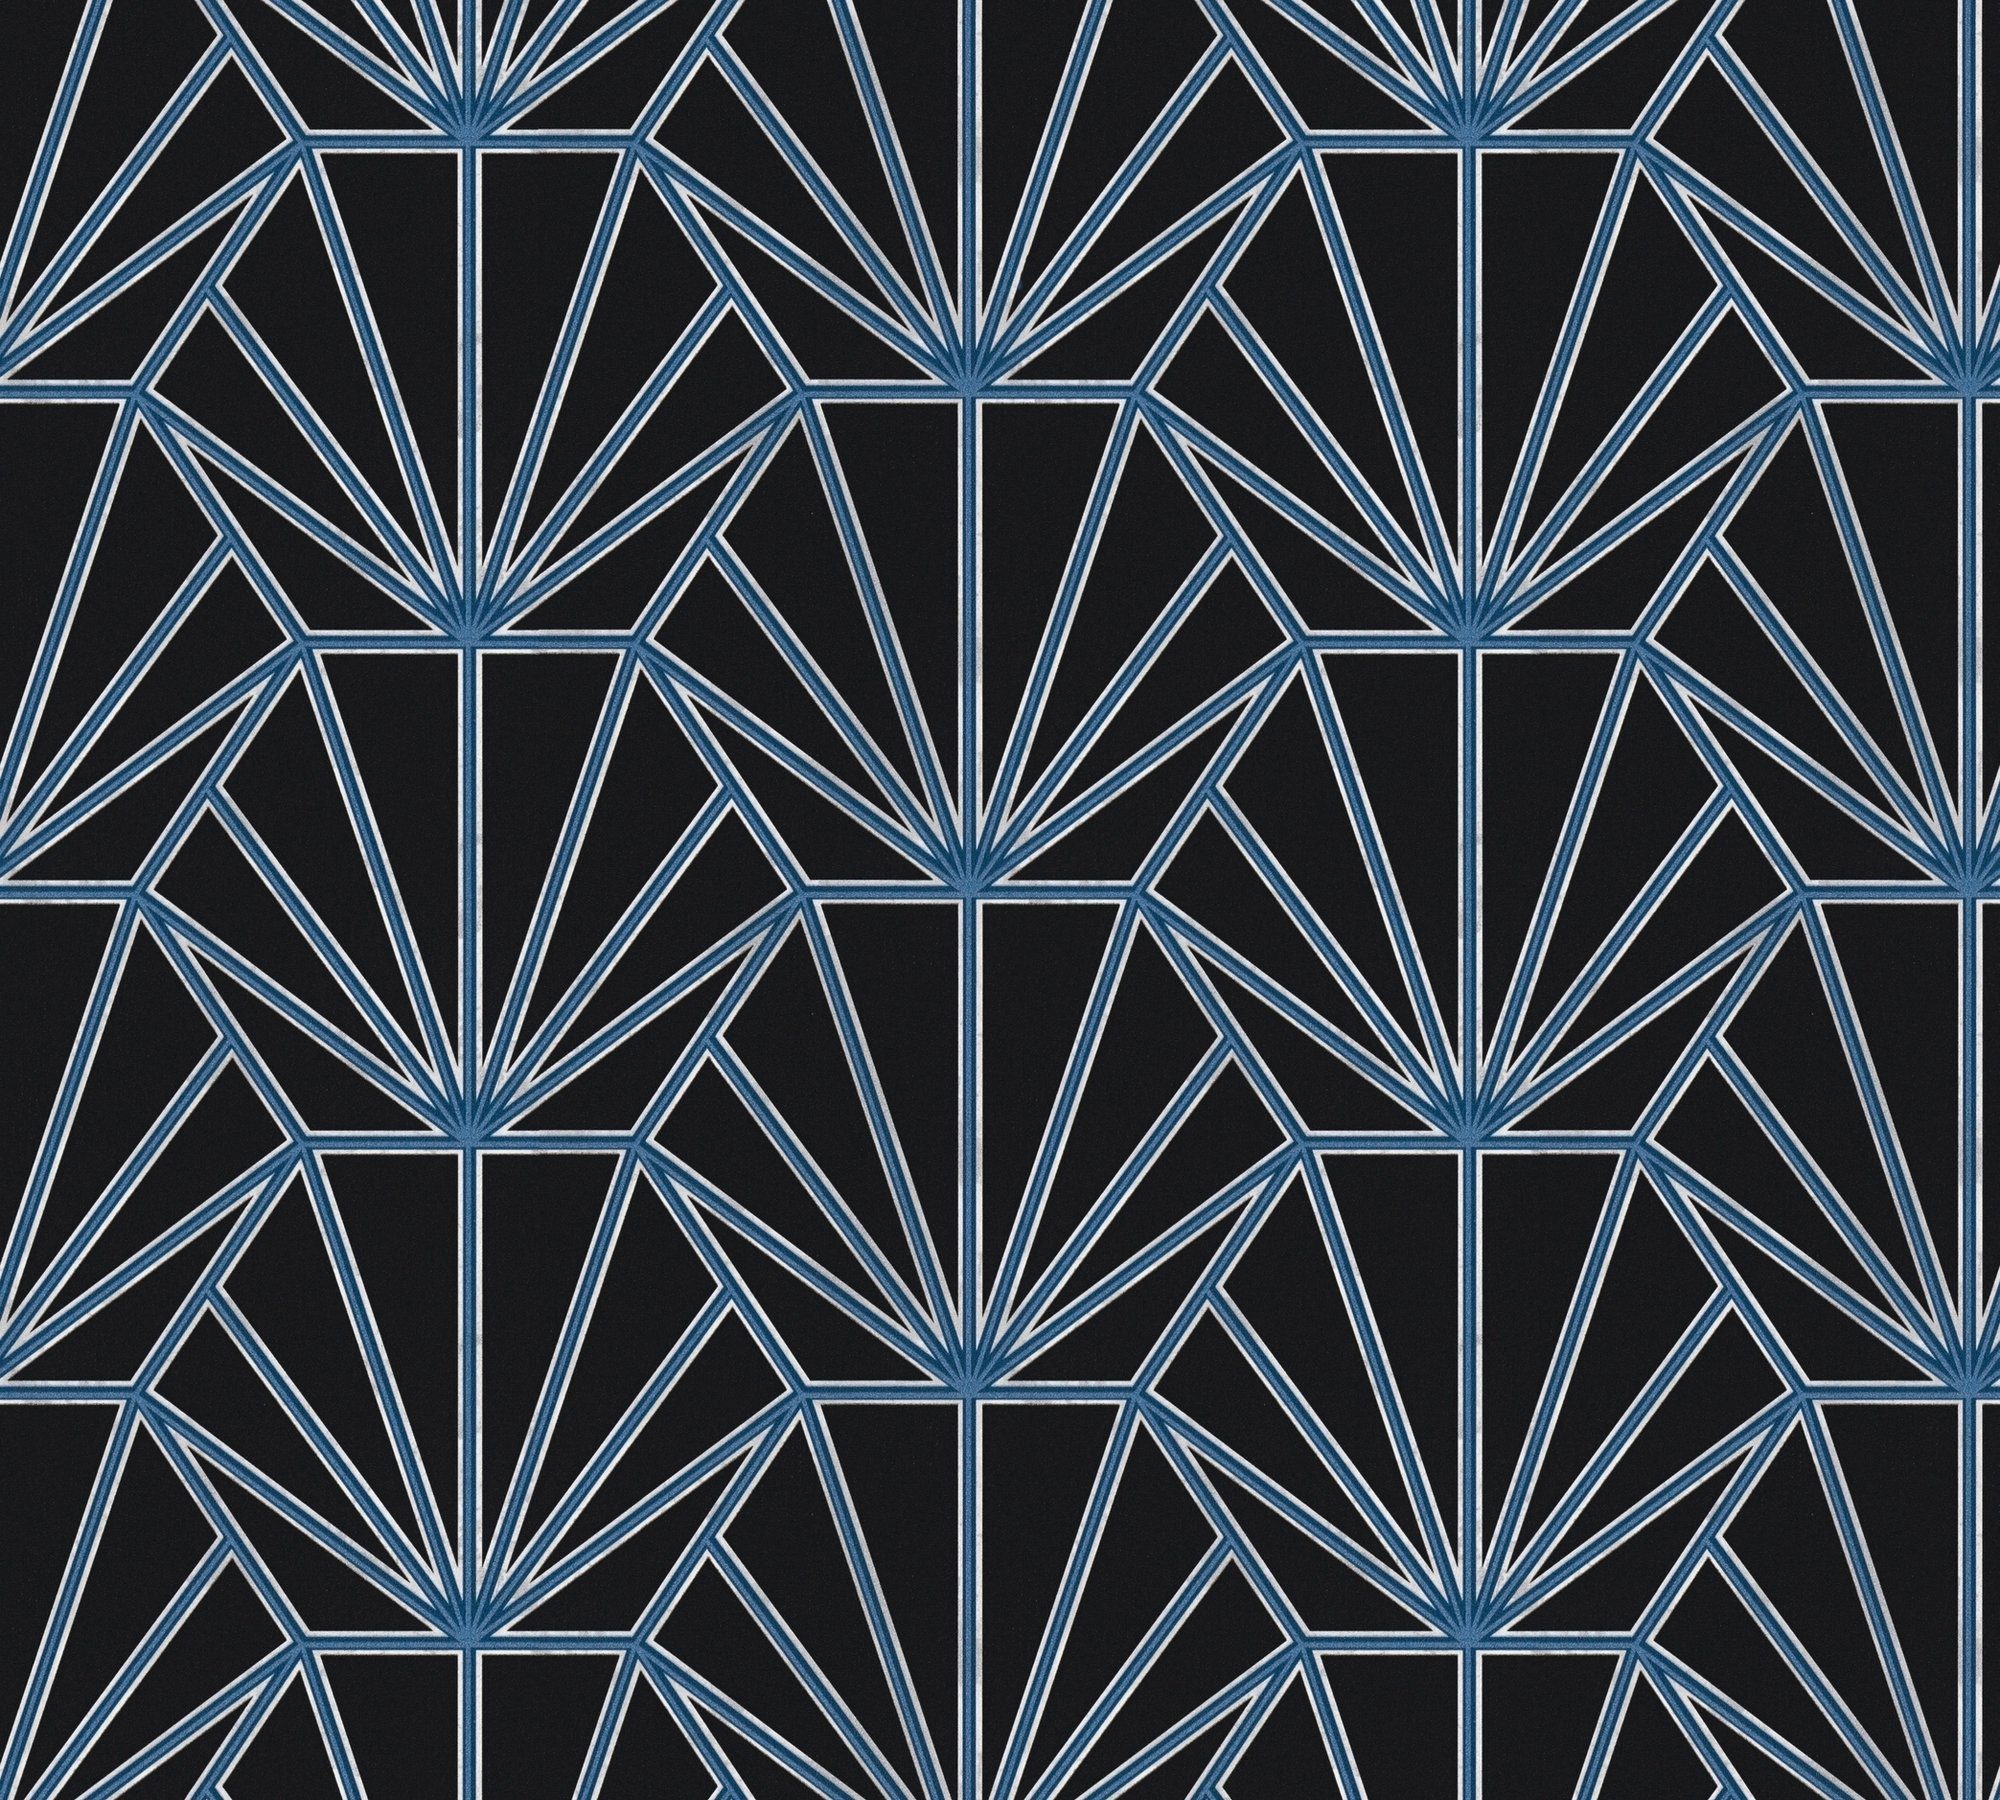 Vliestapete, schwarz/blau/weiß Tapete grafisch, Geometrisch Création Hechter Daniel A.S. Designertapete